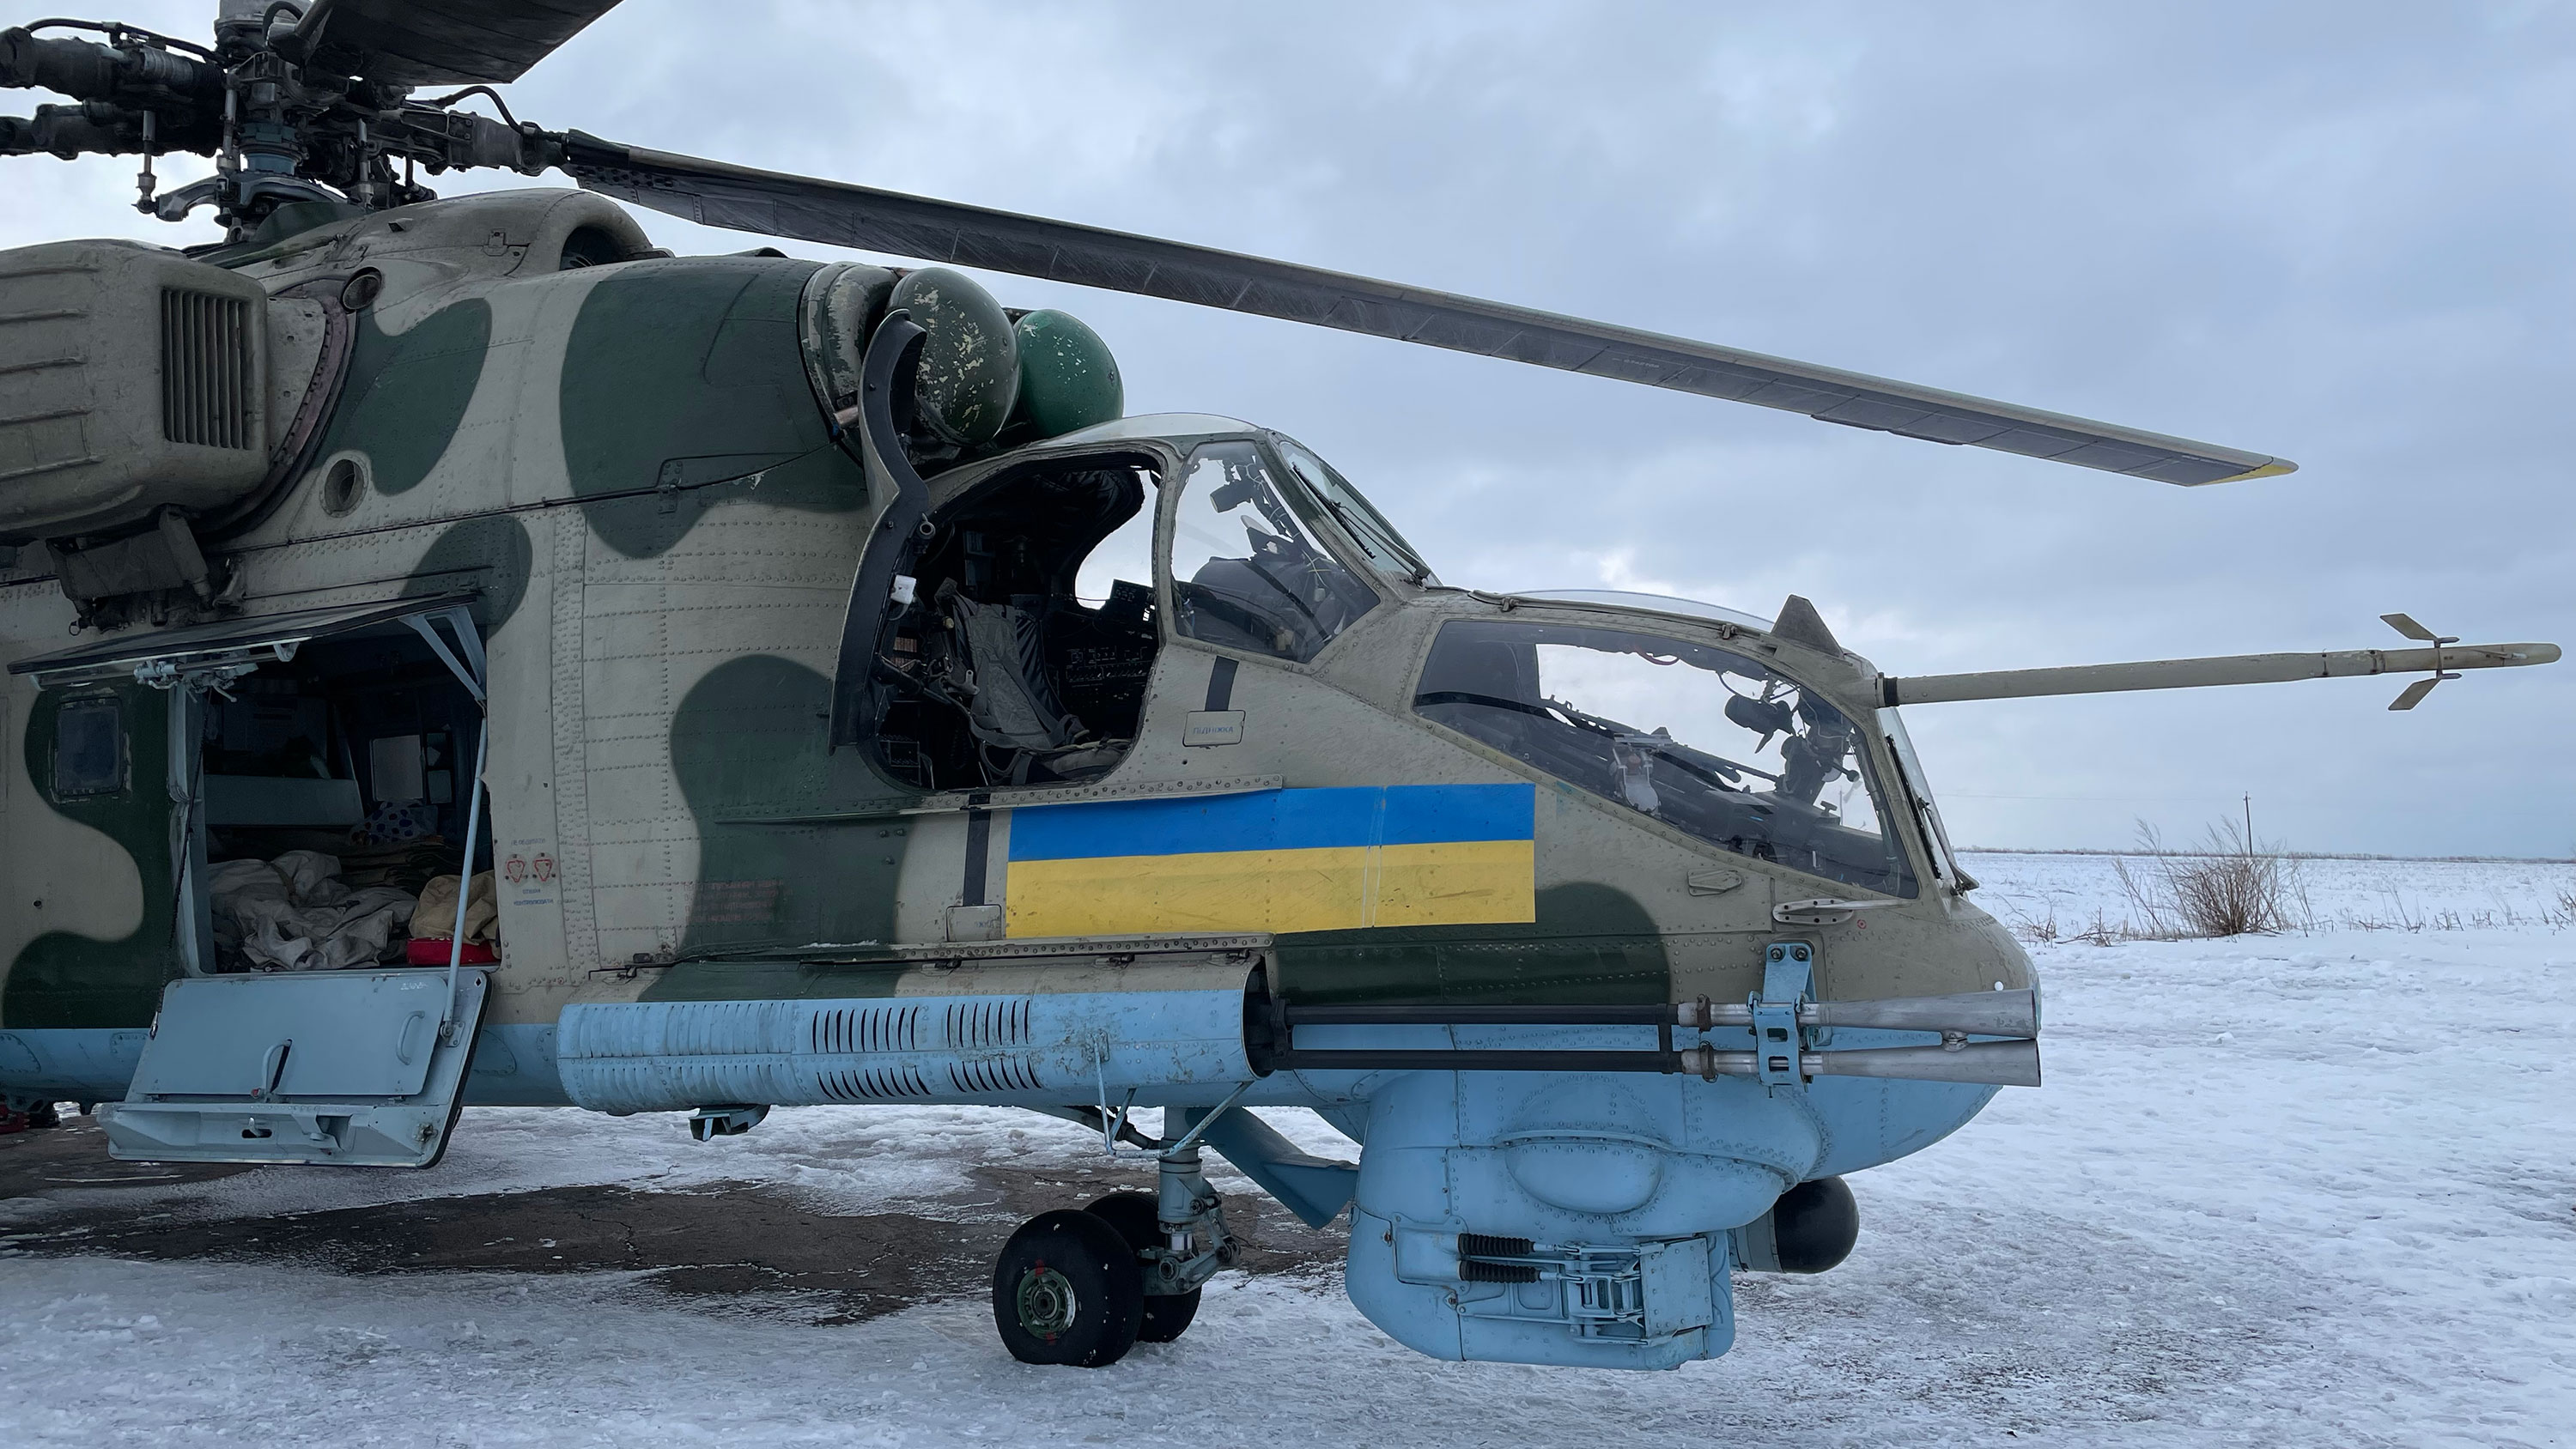 Among Ukraine’s helicopter fleet, is the Soviet-built armored Mi-24. 